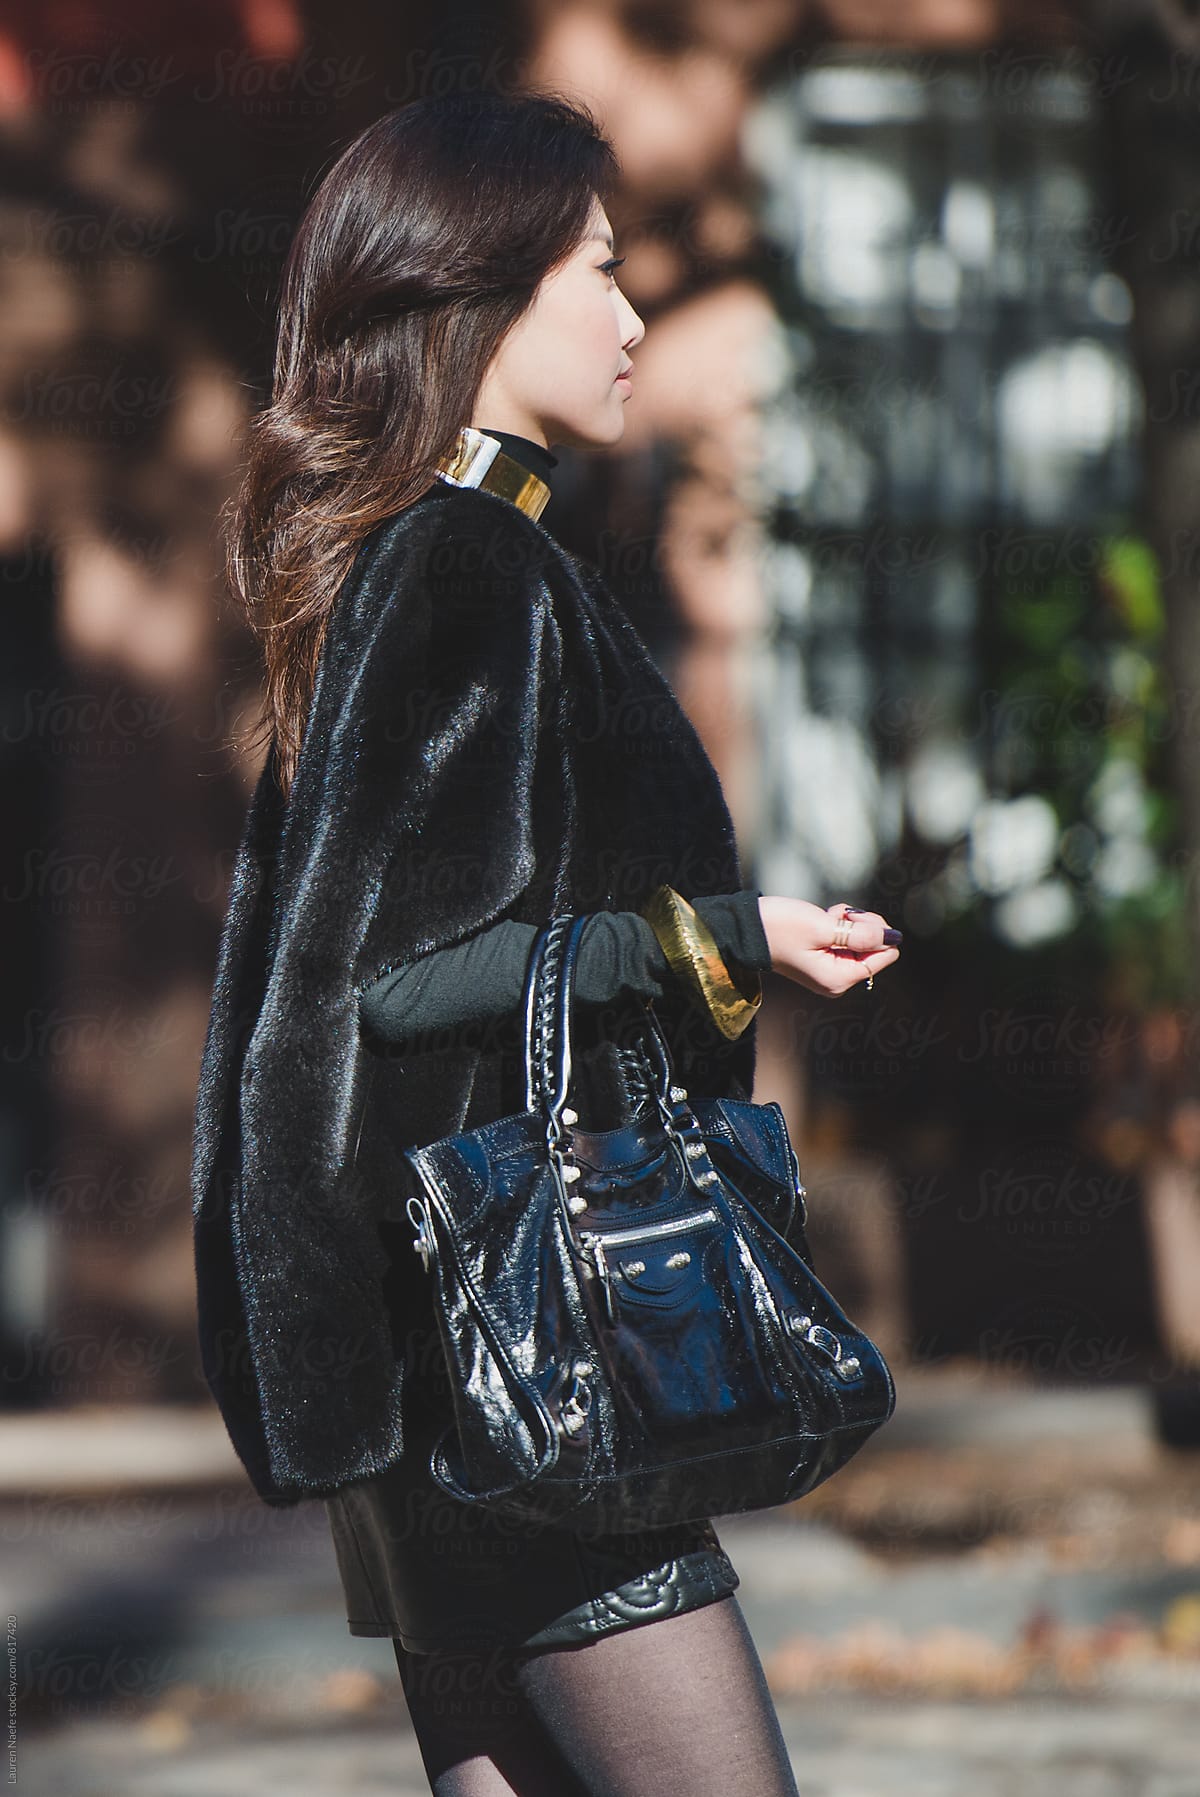 Elegant young woman walking down the street